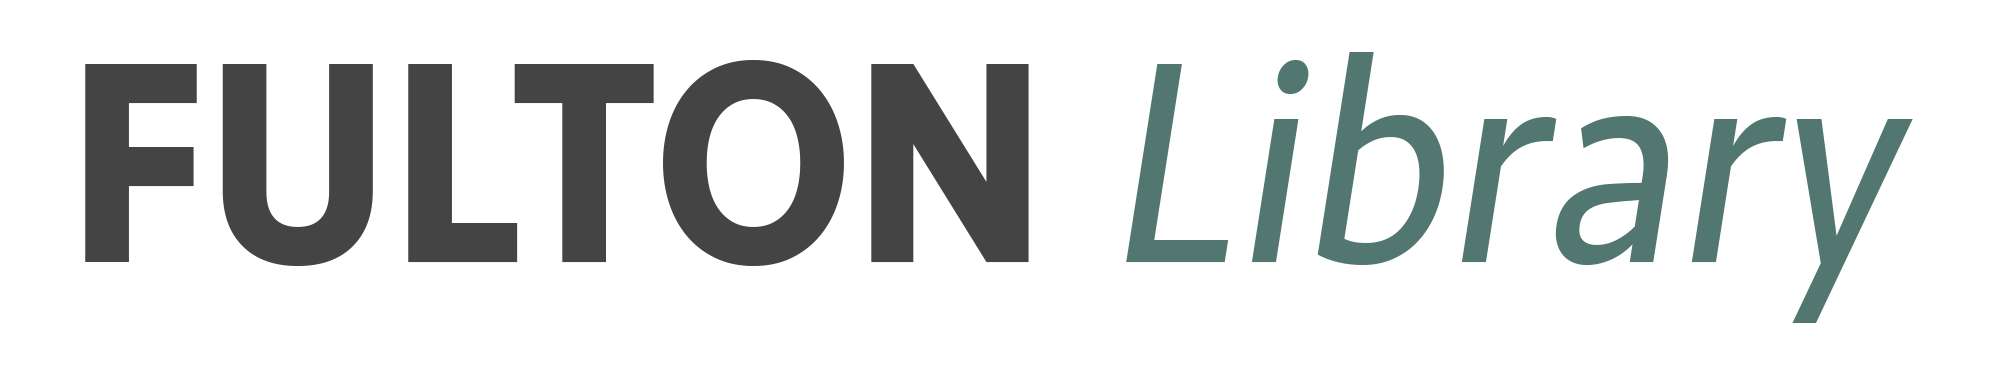 Fulton Library logo